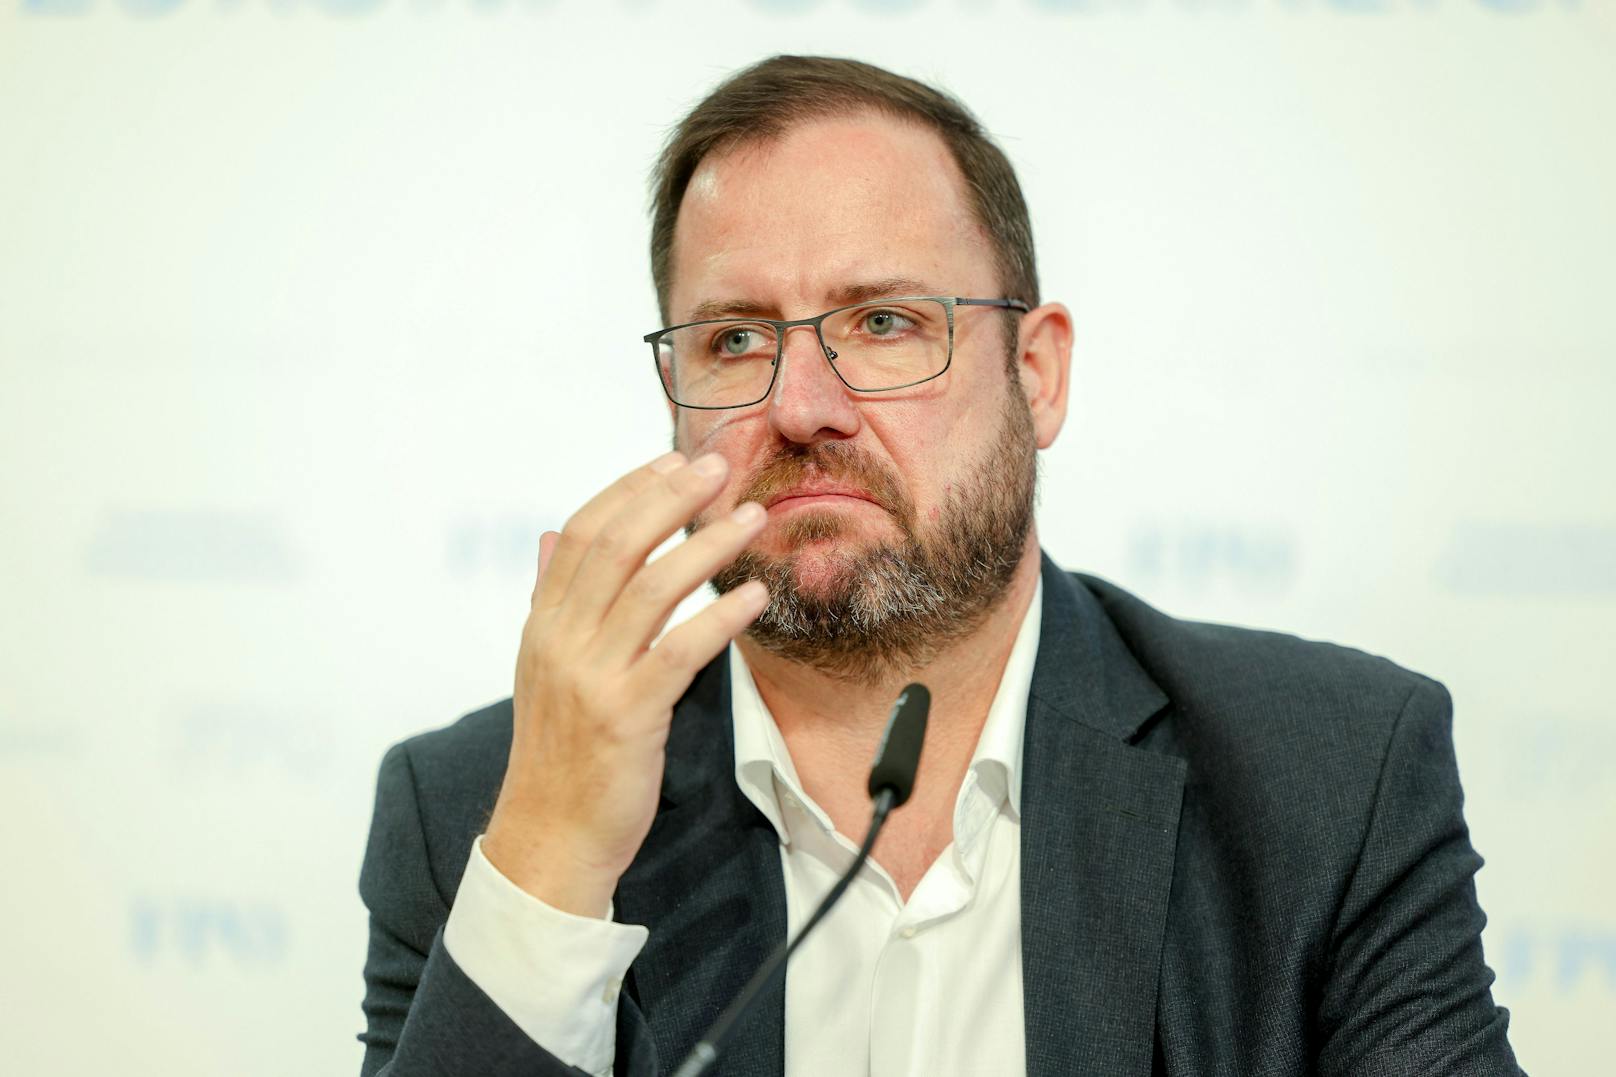 FPÖ-Mediensprecher Christian Hafenecker.